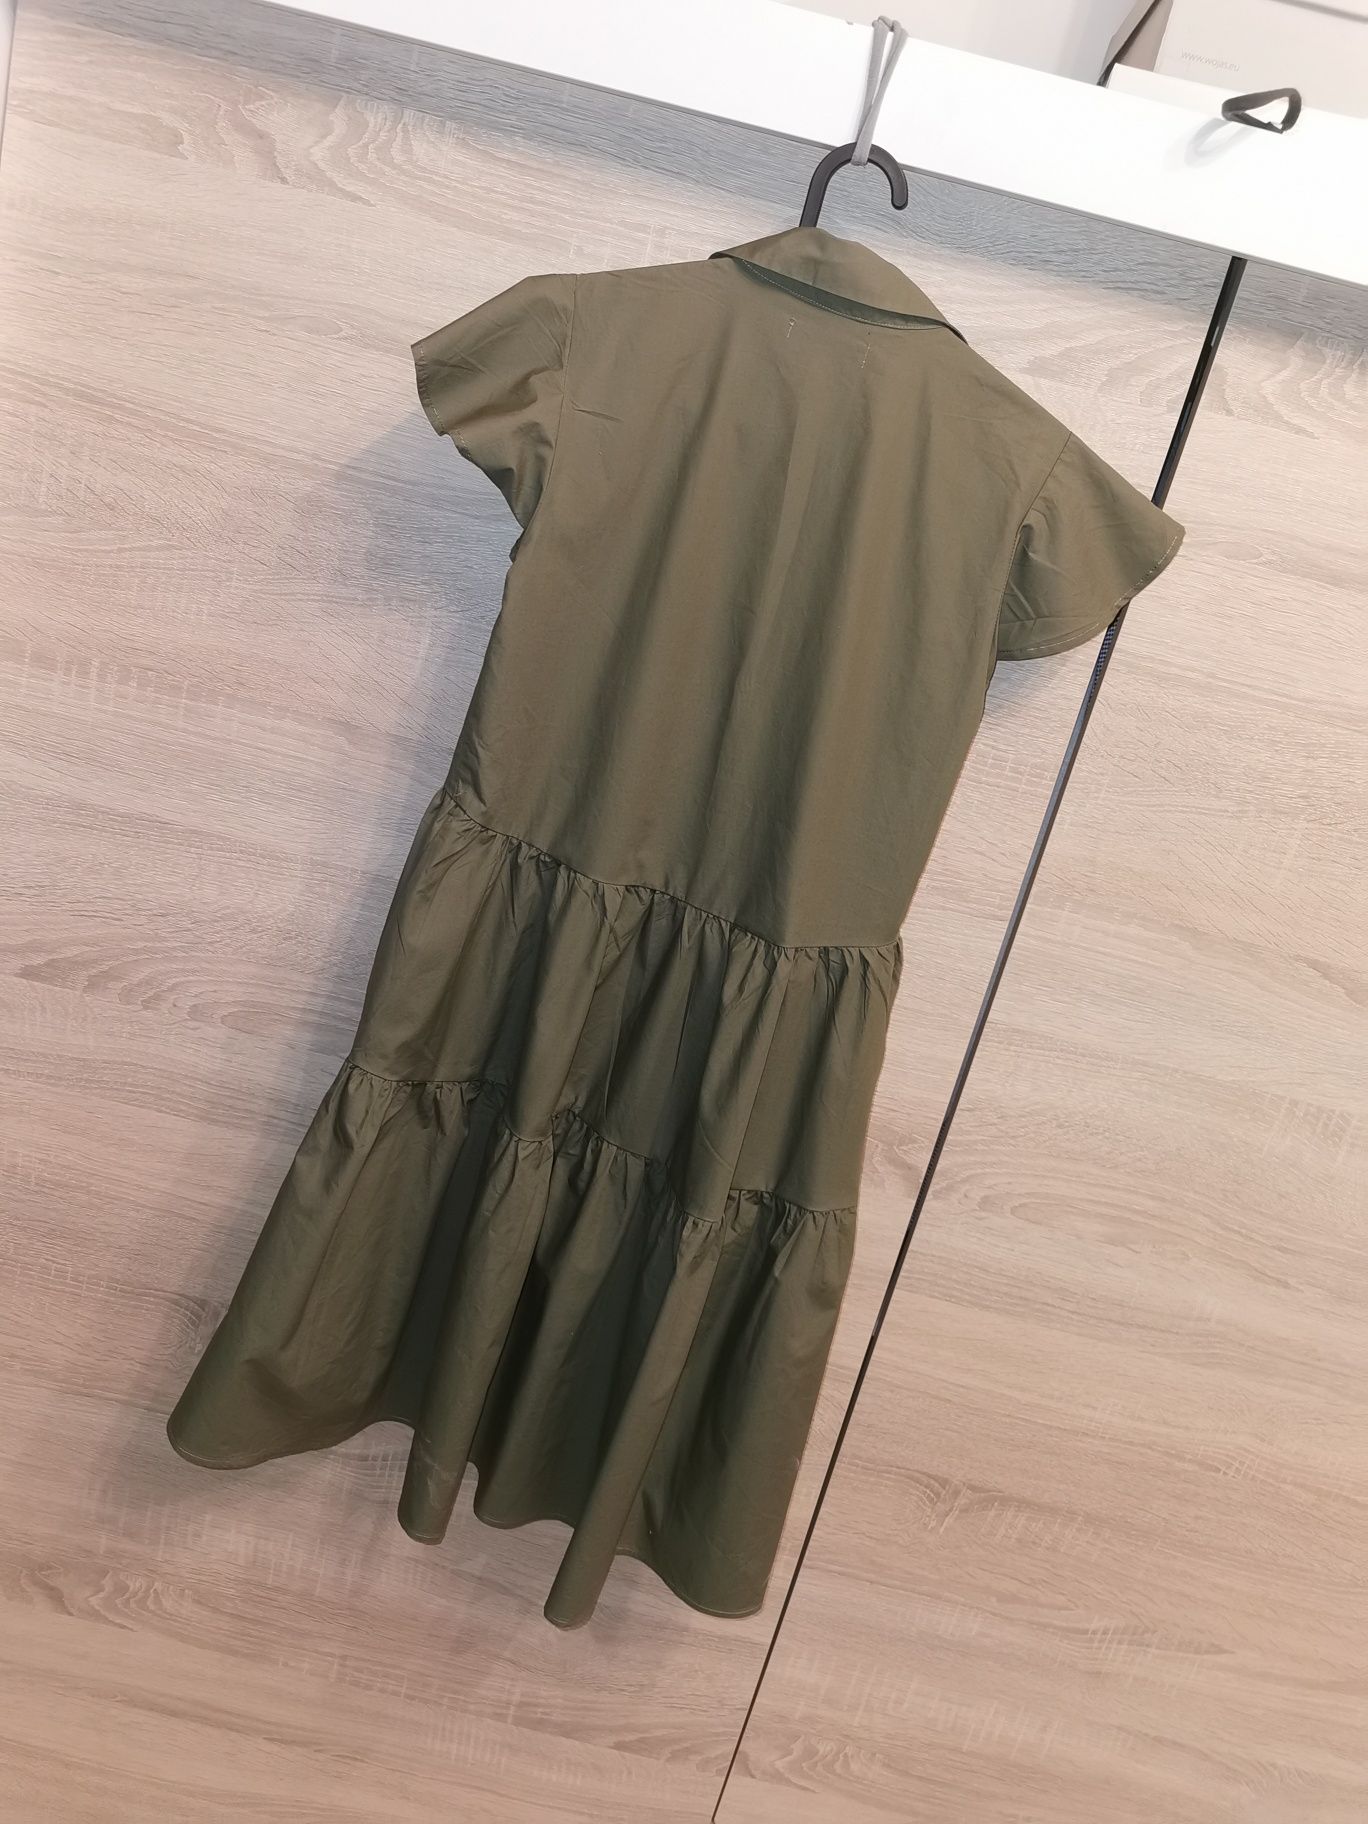 Bawełniana sukienka Reserved 34 XS khaki army green falbanki